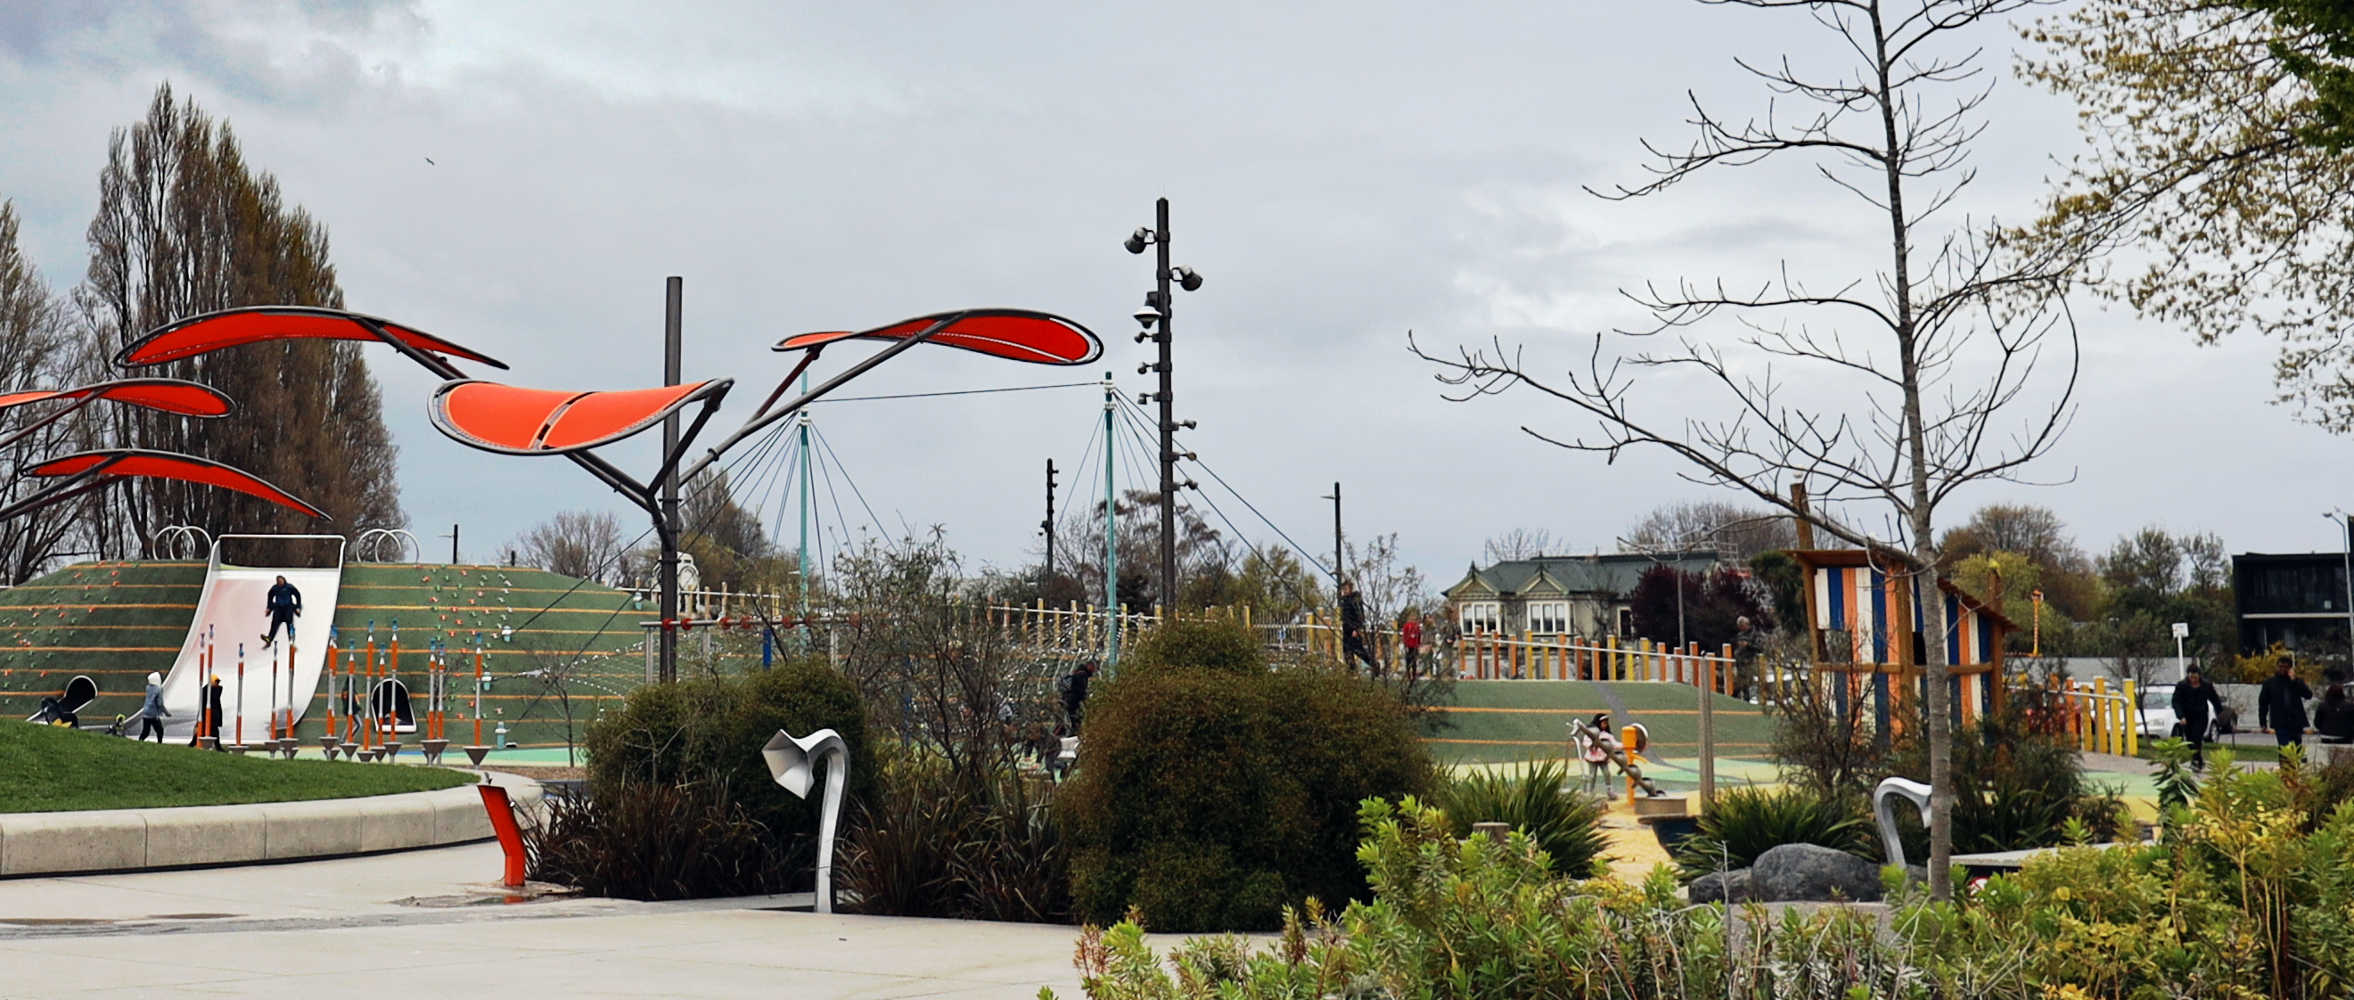 Margaret's playground slides and swings, Canterbury, New Zealand